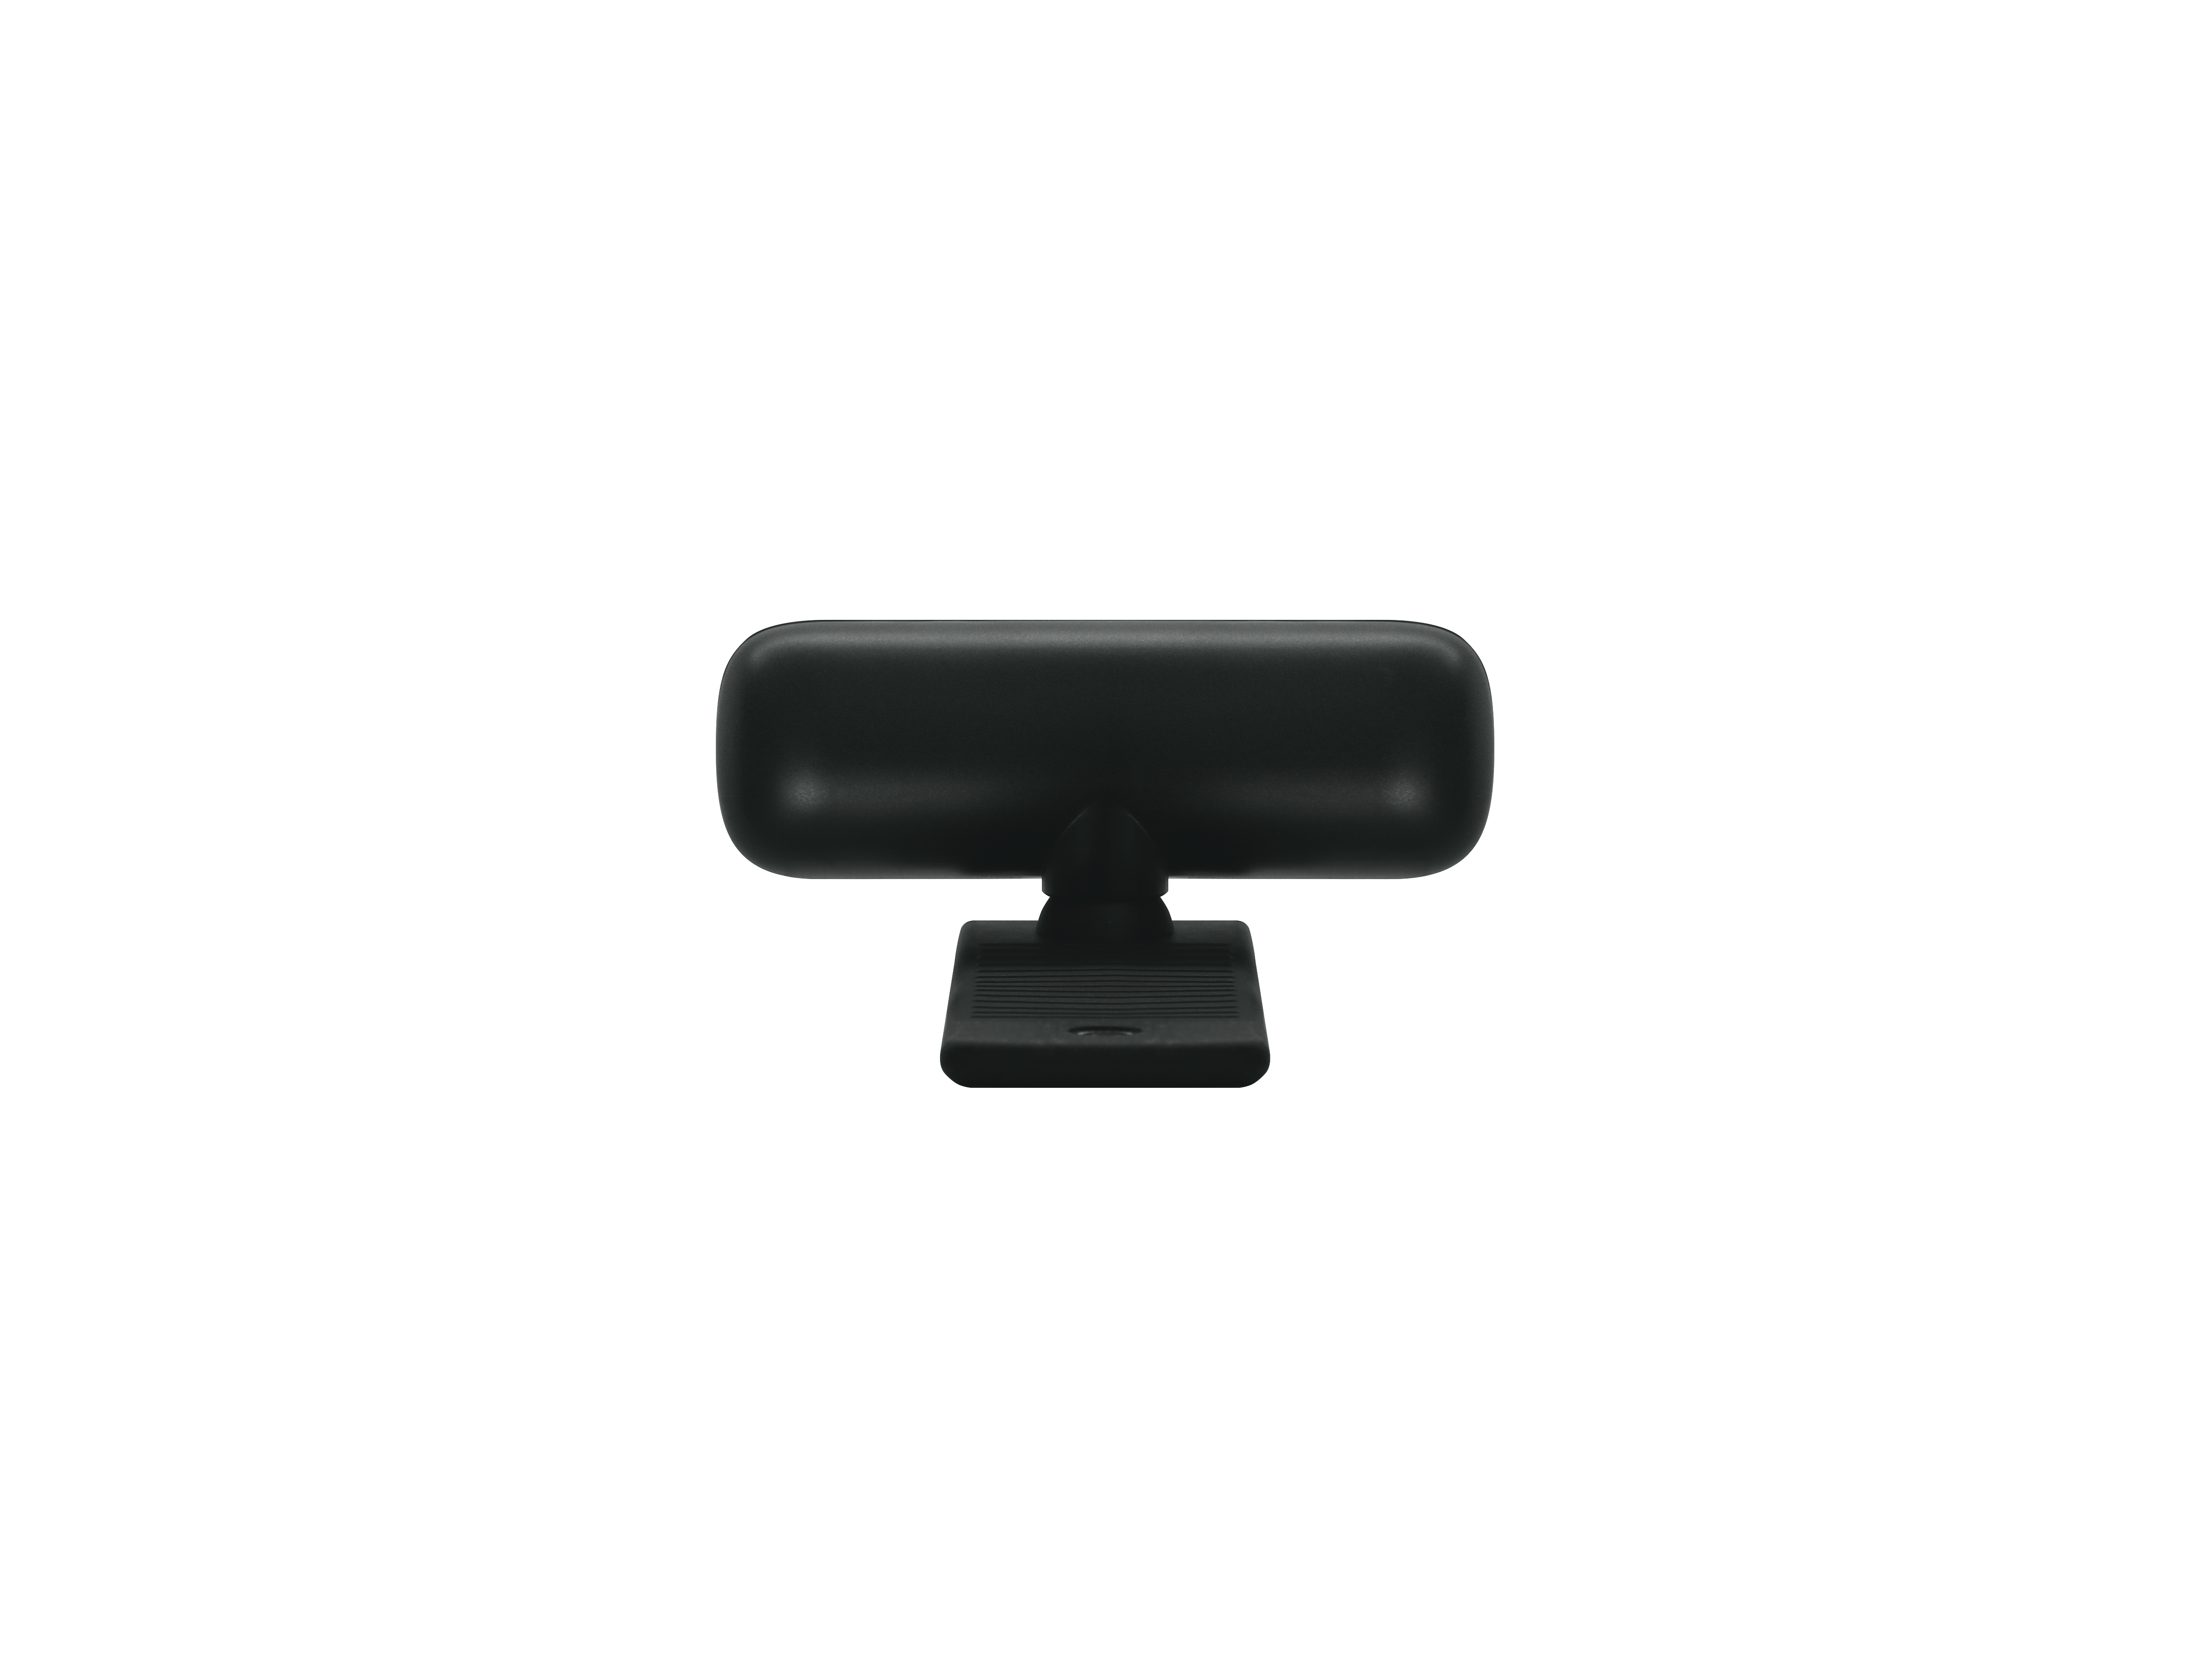 Acer QHD konferenční webkamera3 